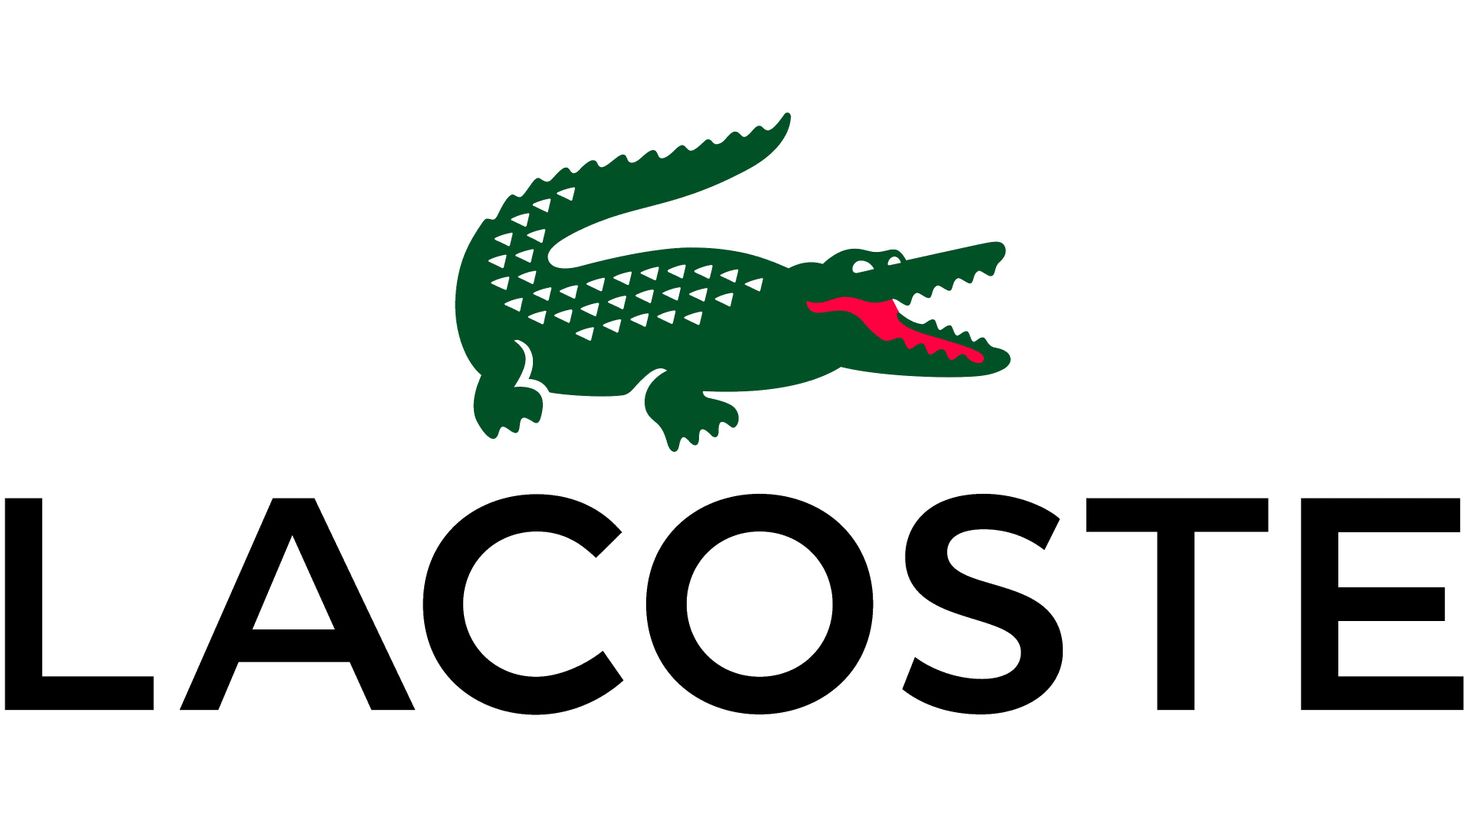 Lacoste logo Evolution